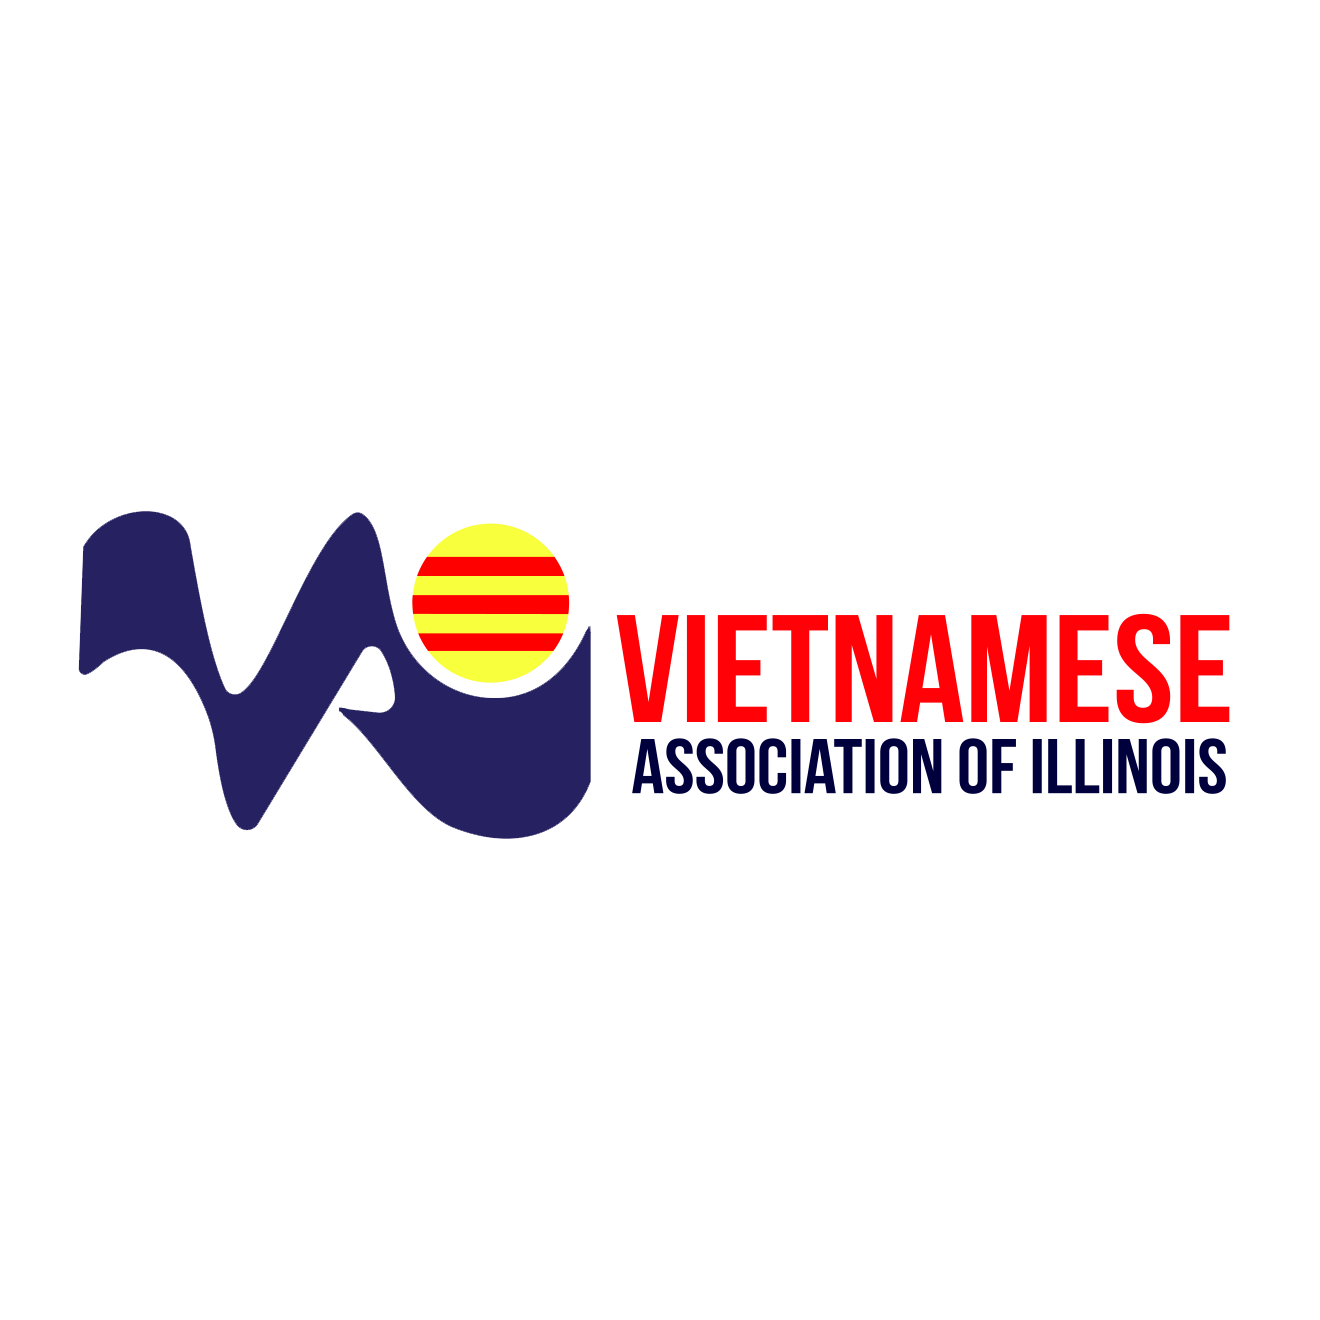 Vietnamese Association of Illinois - Vietnamese organization in Chicago IL